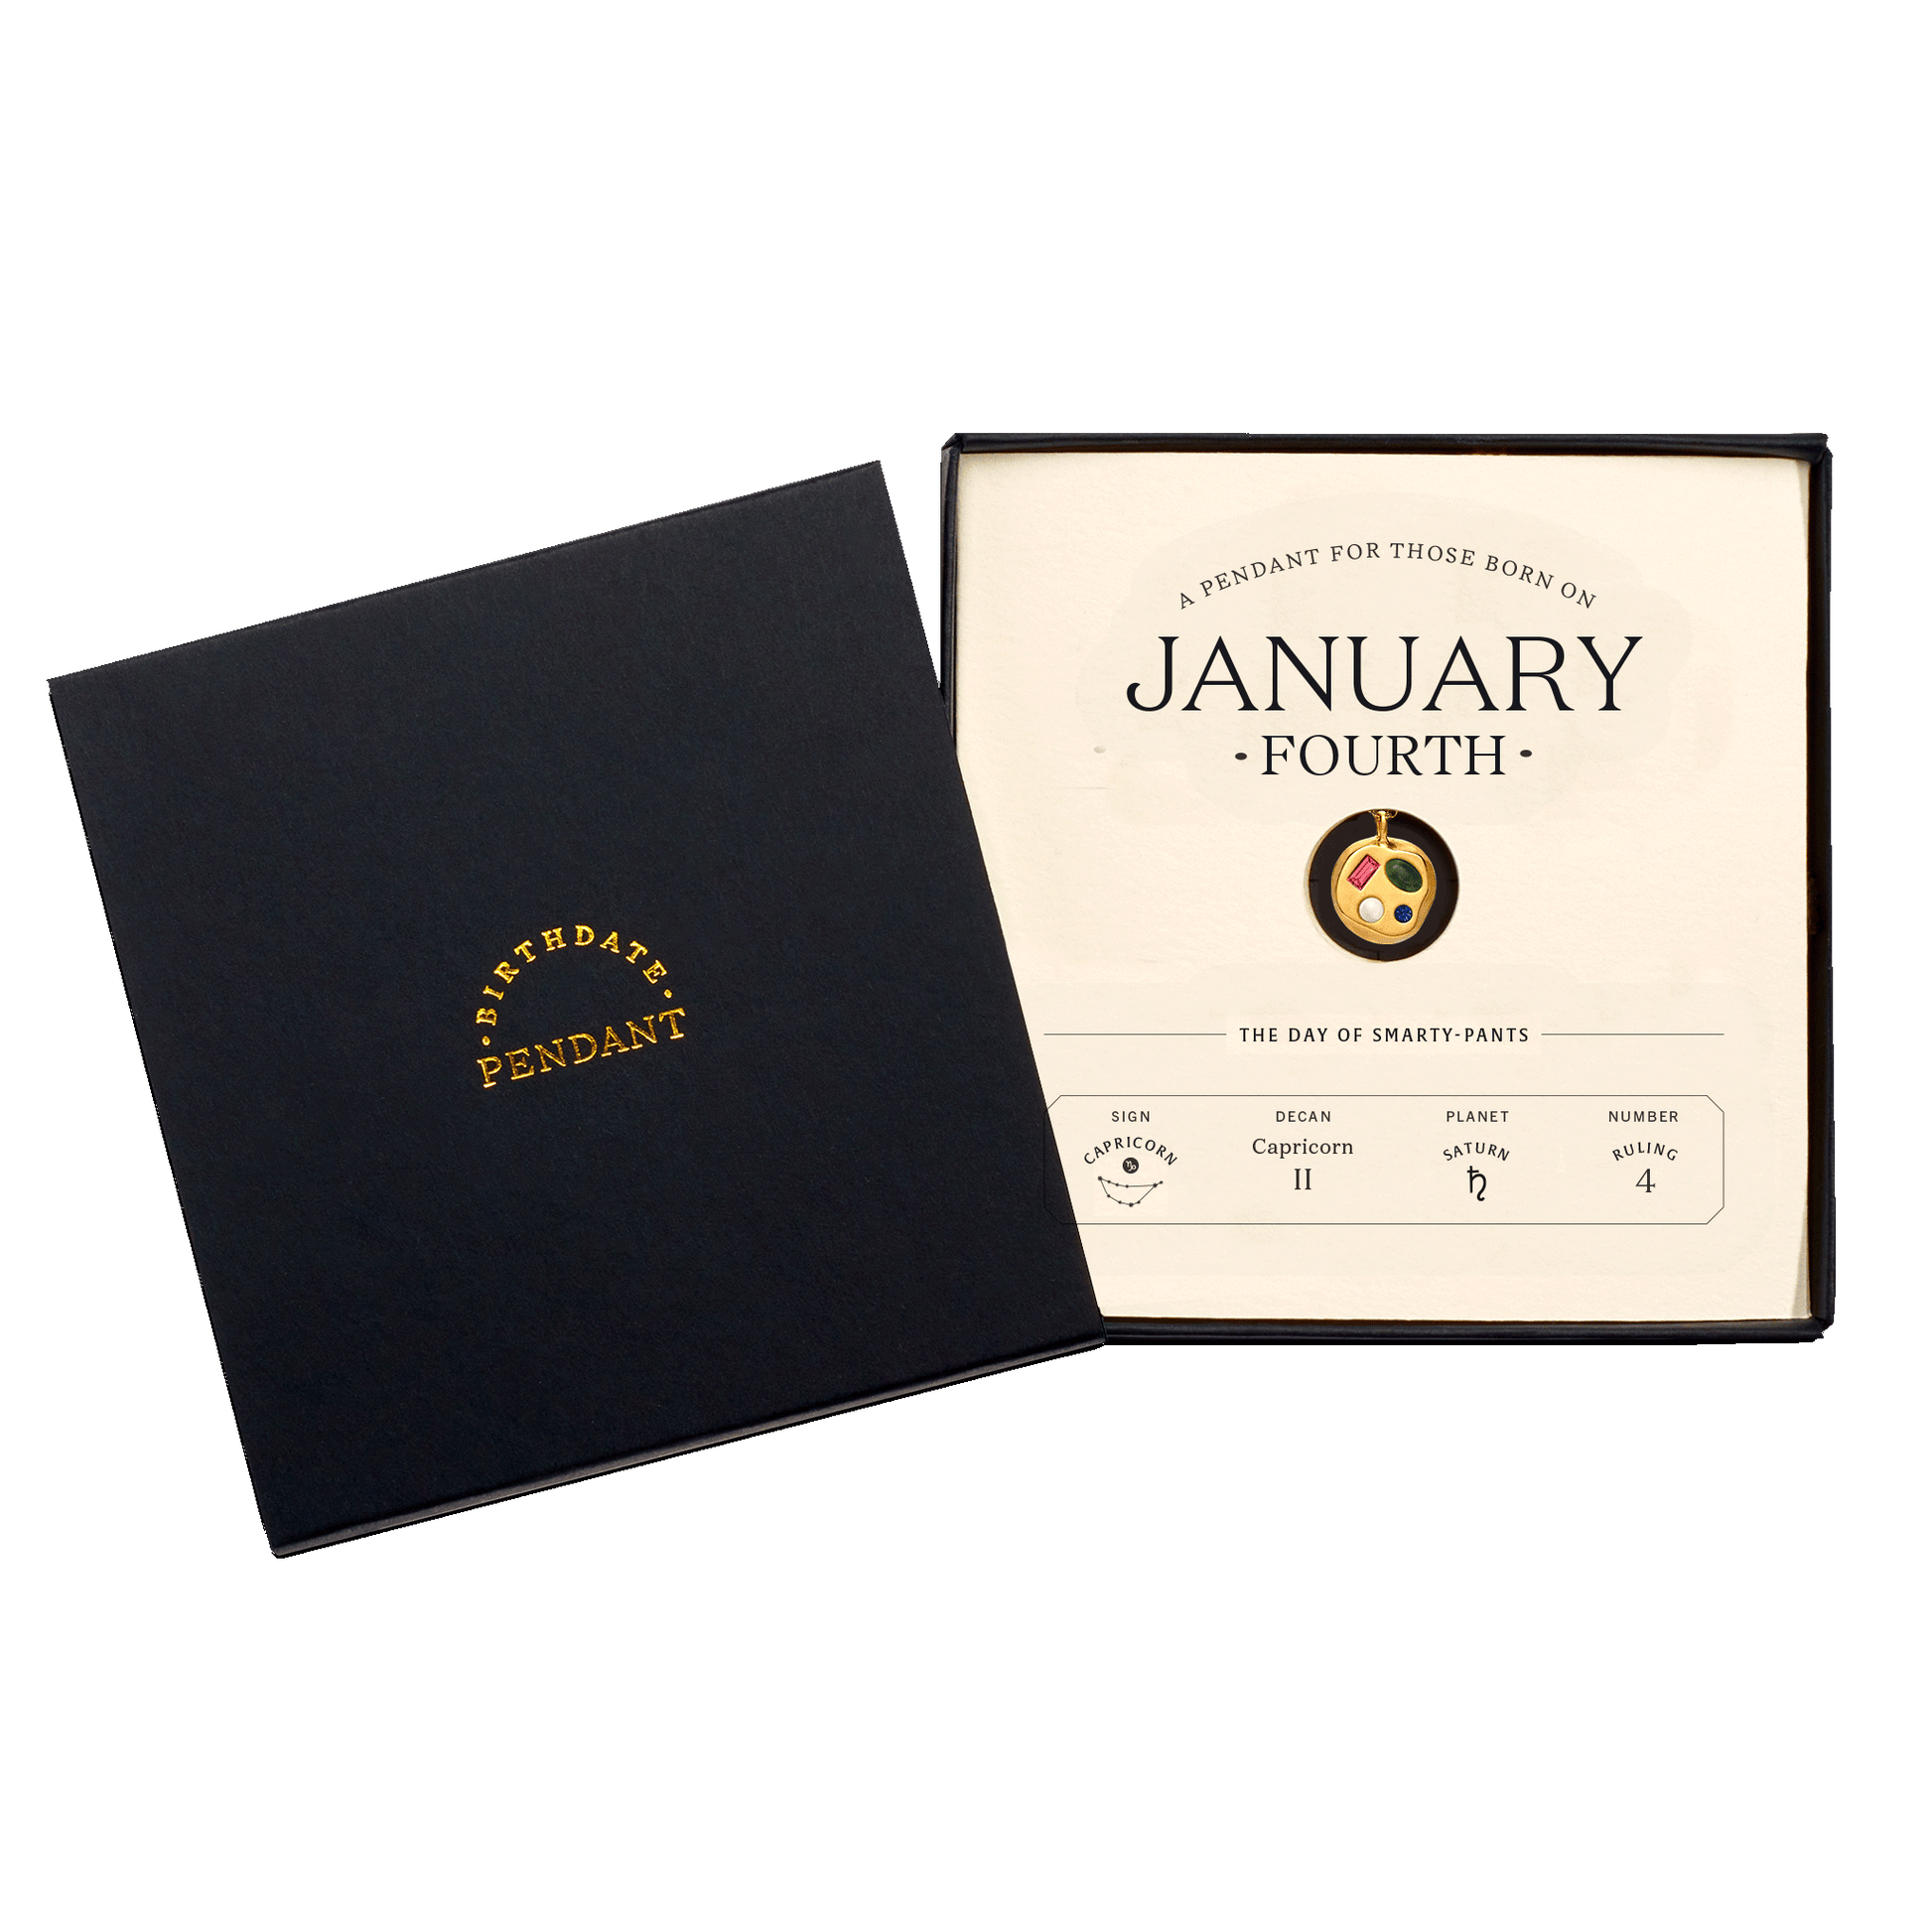 The January Fourth Pendant inside its box